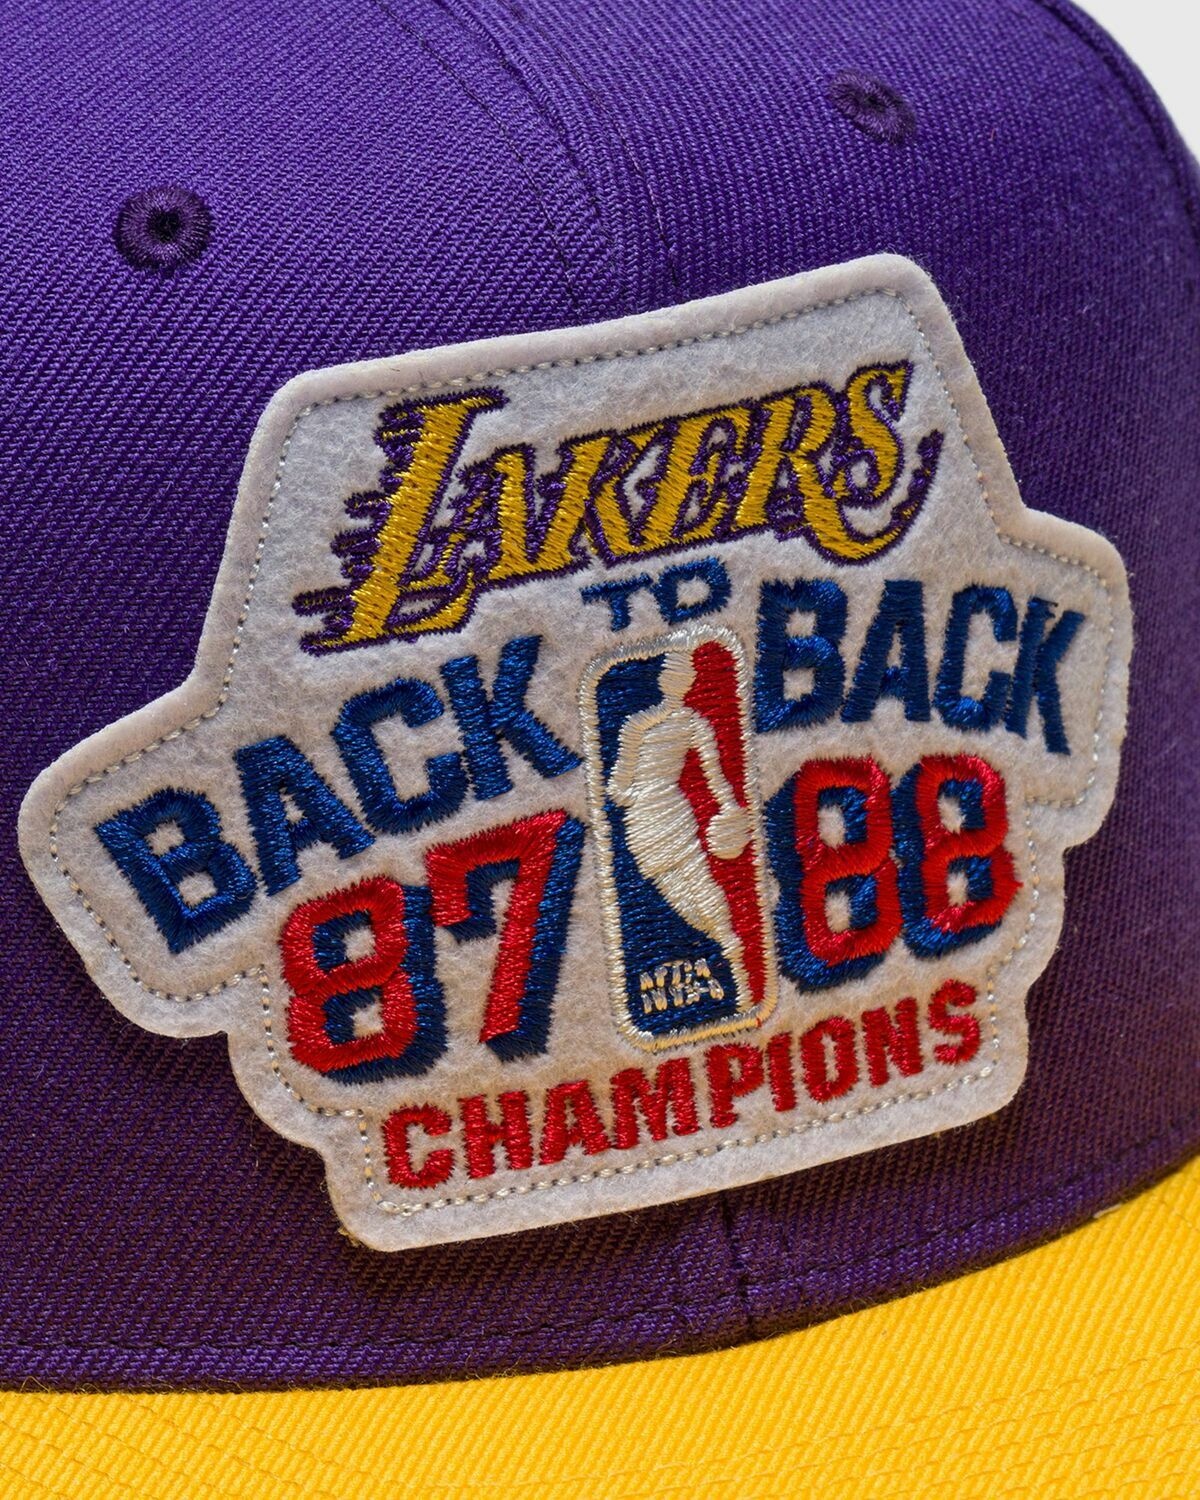 Mitchell & Ness Nba B2 B Snapback Hwc Los Angeles Lakers Purple - Mens - Caps